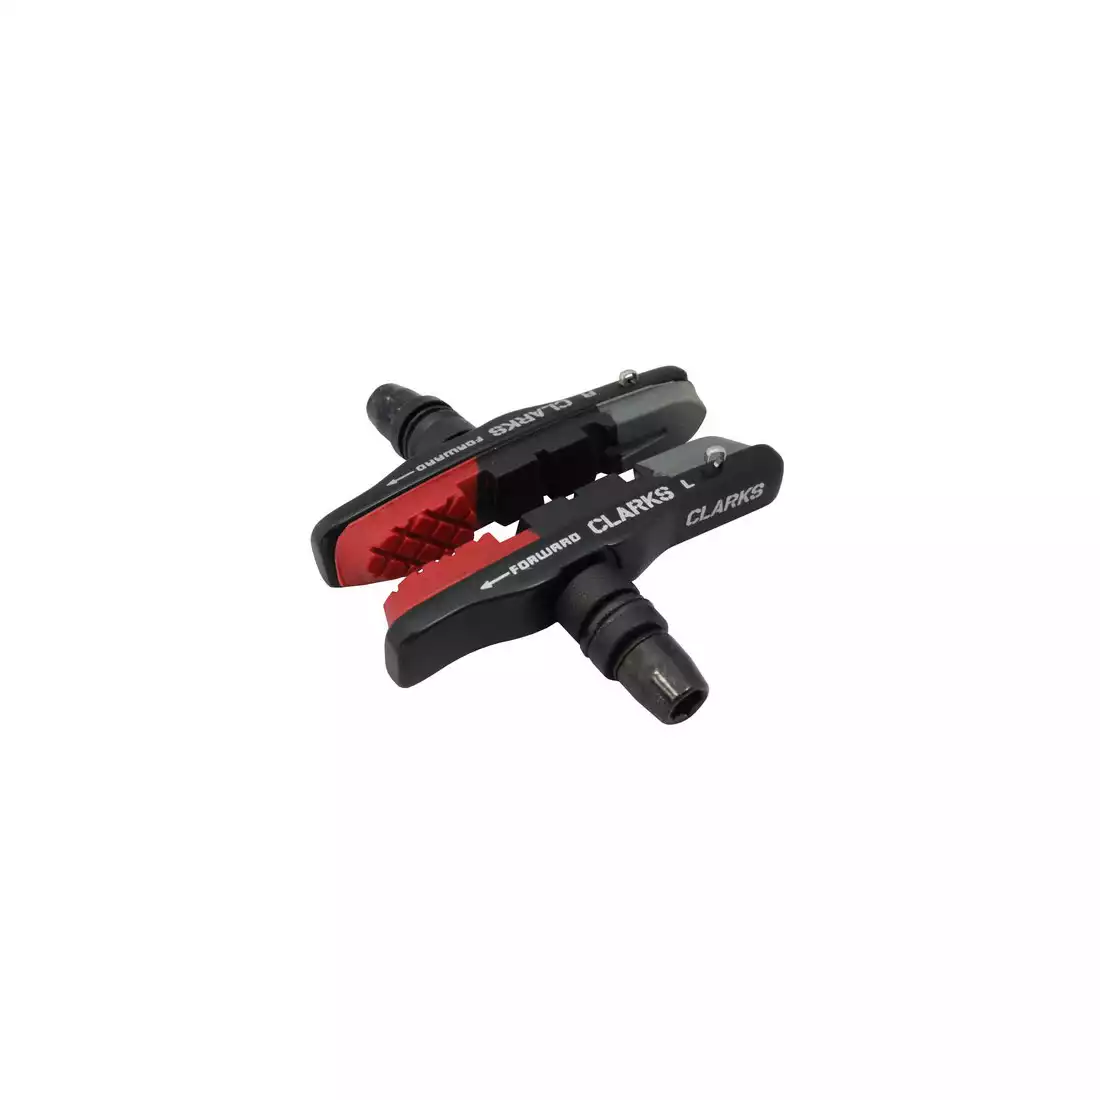 CLARKS CPS513 Brzdové destičky pro brzdy MTB V-brake, červeno-černo-šedé